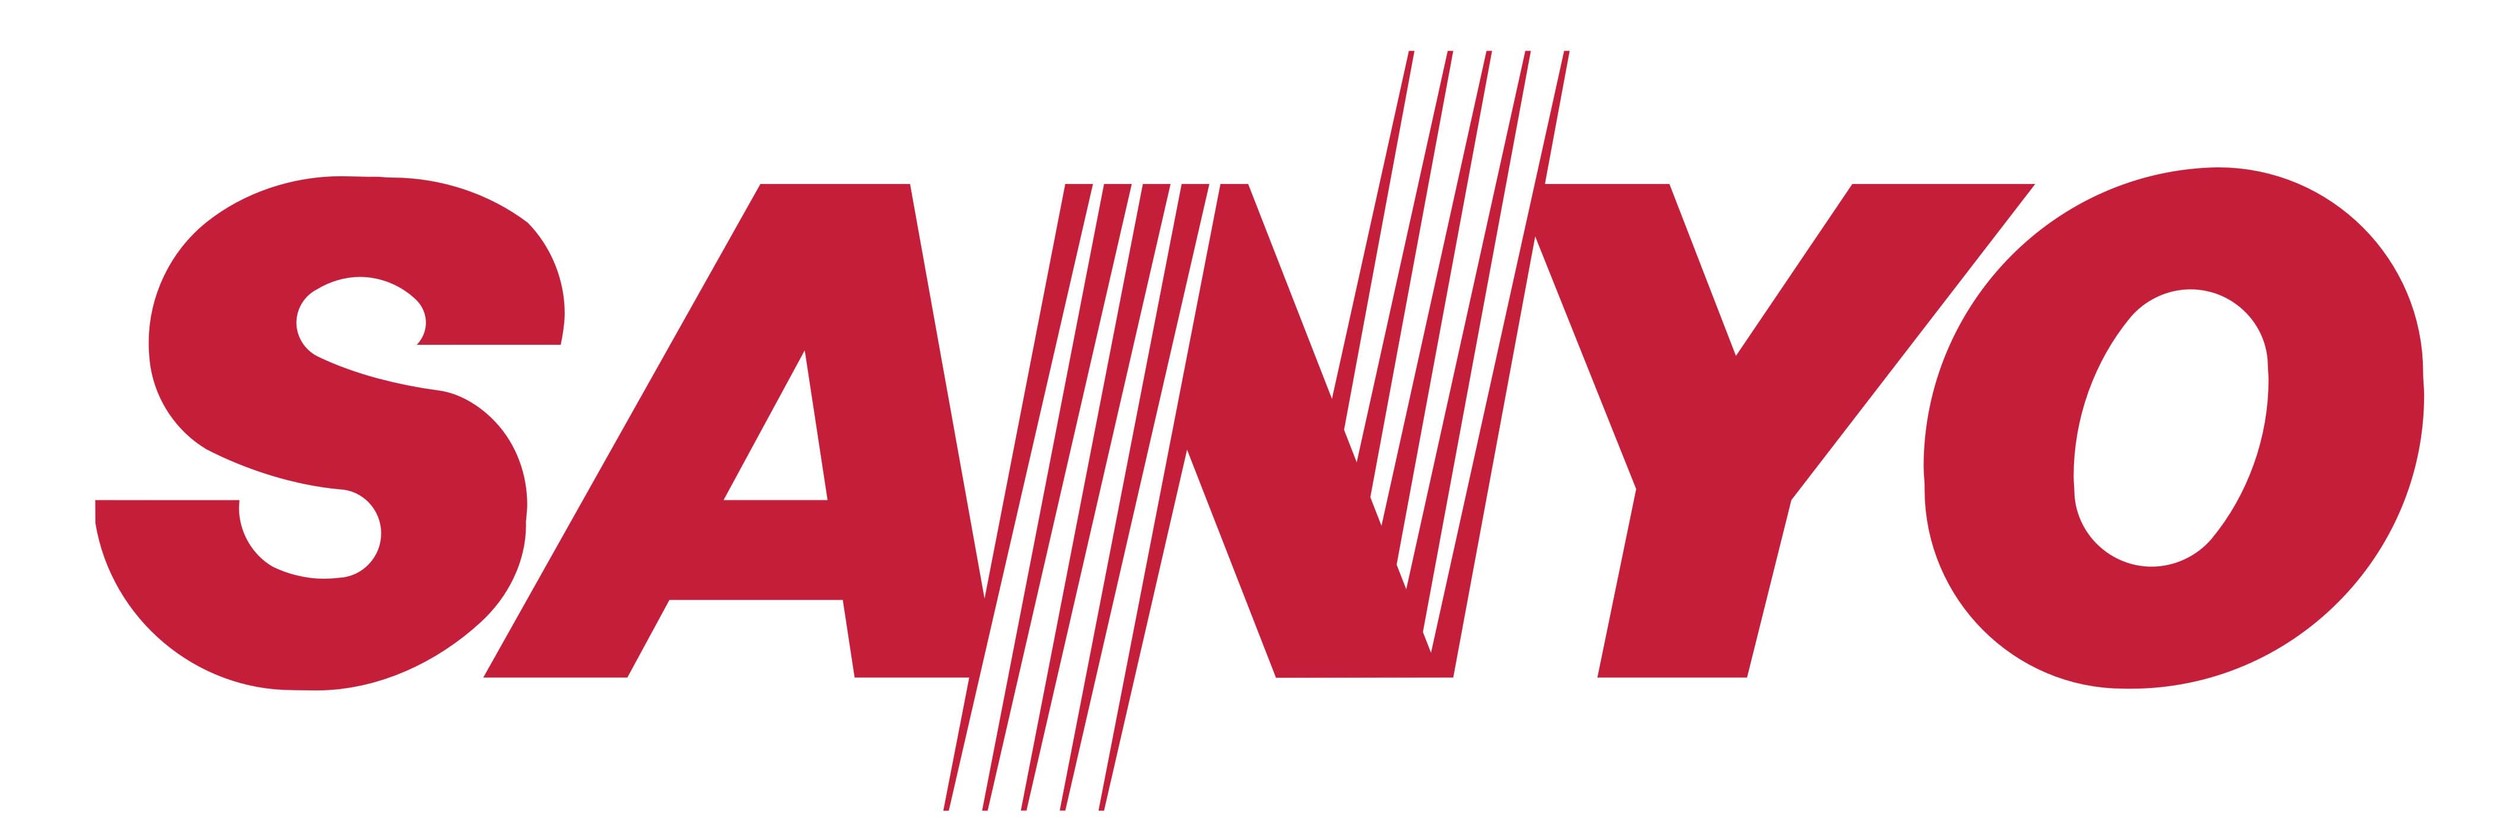 SANYO_logo.jpg